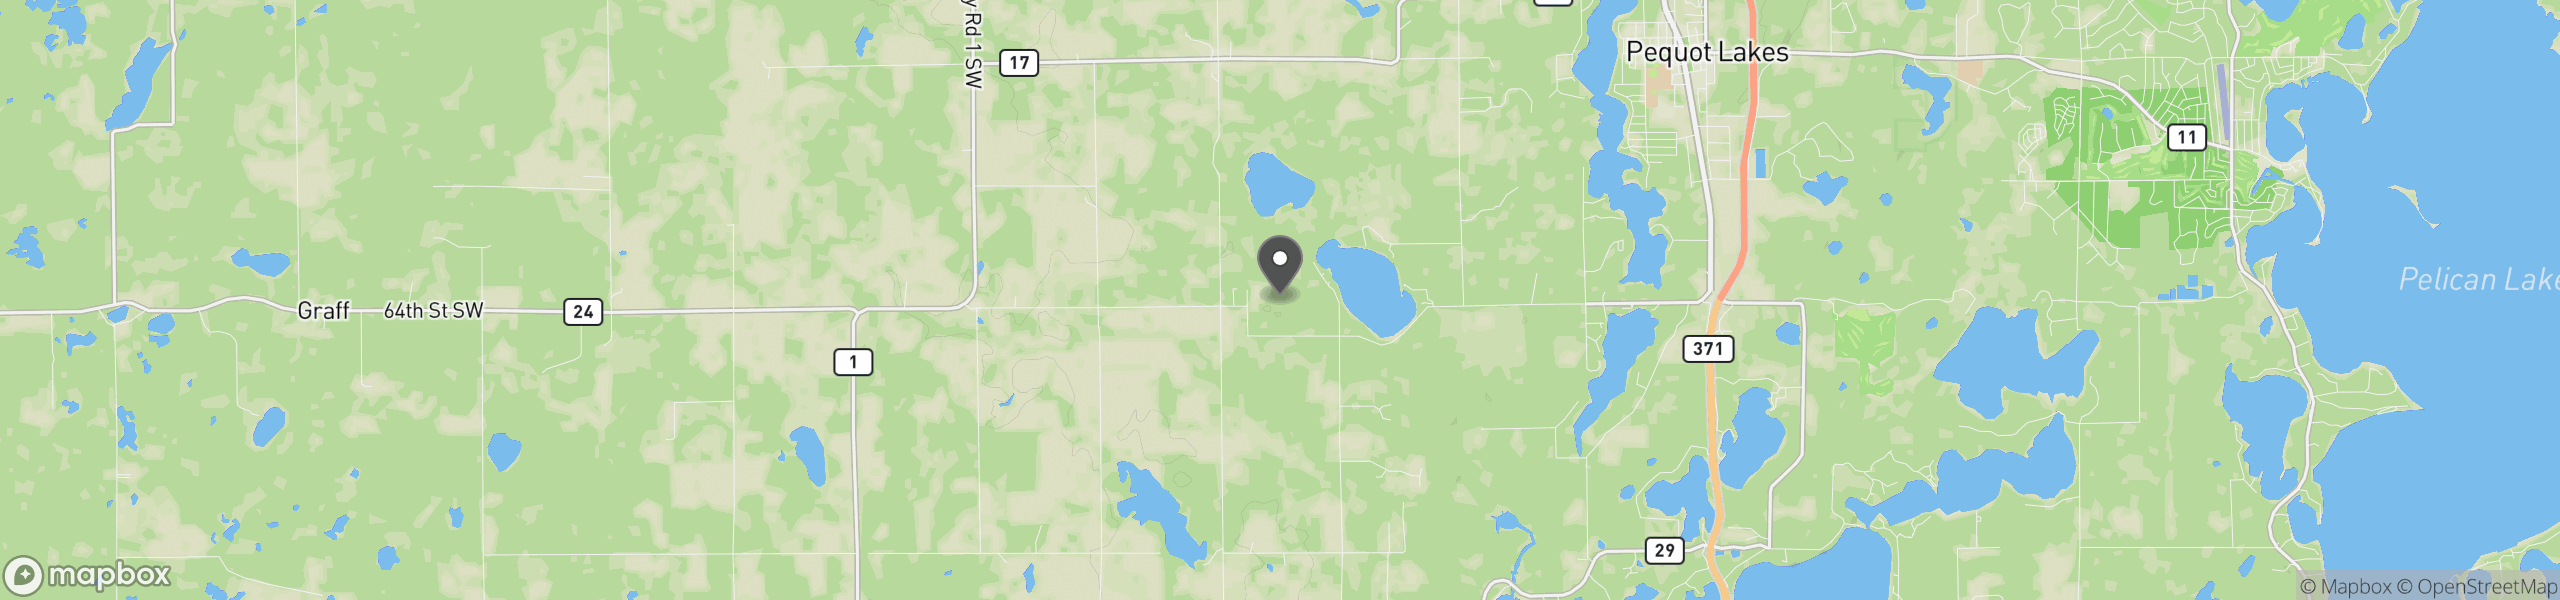 Pequot Lakes, MN 56472